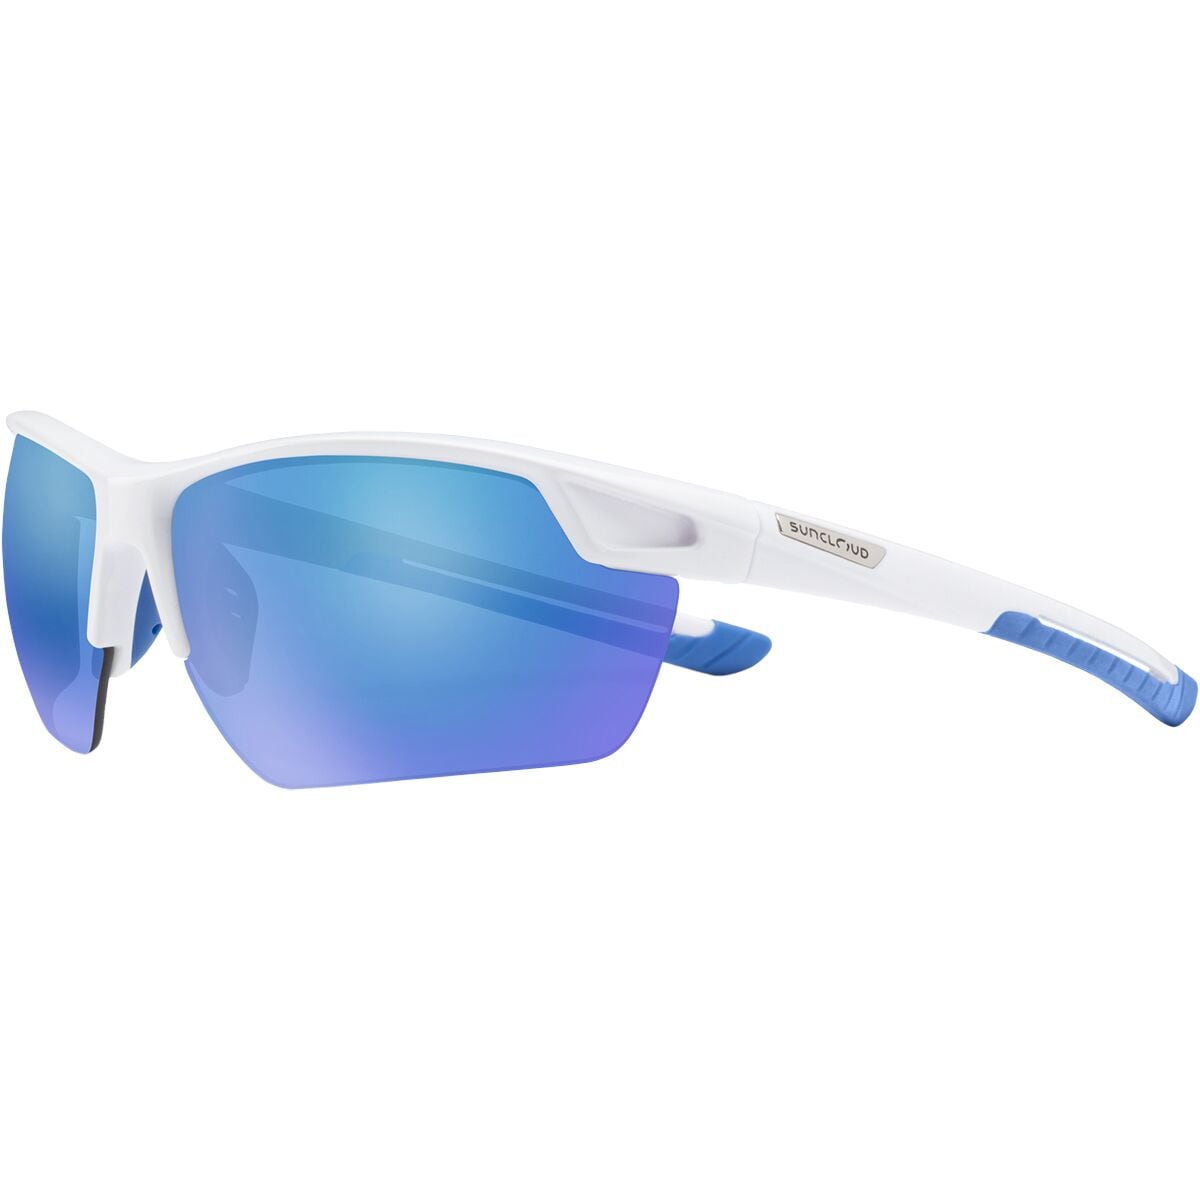 Поляризованные солнцезащитные очки contender Suncloud Polarized Optics, цвет white/polar blue2 mirror очки солнцезащитные stylemark polarized l2480d